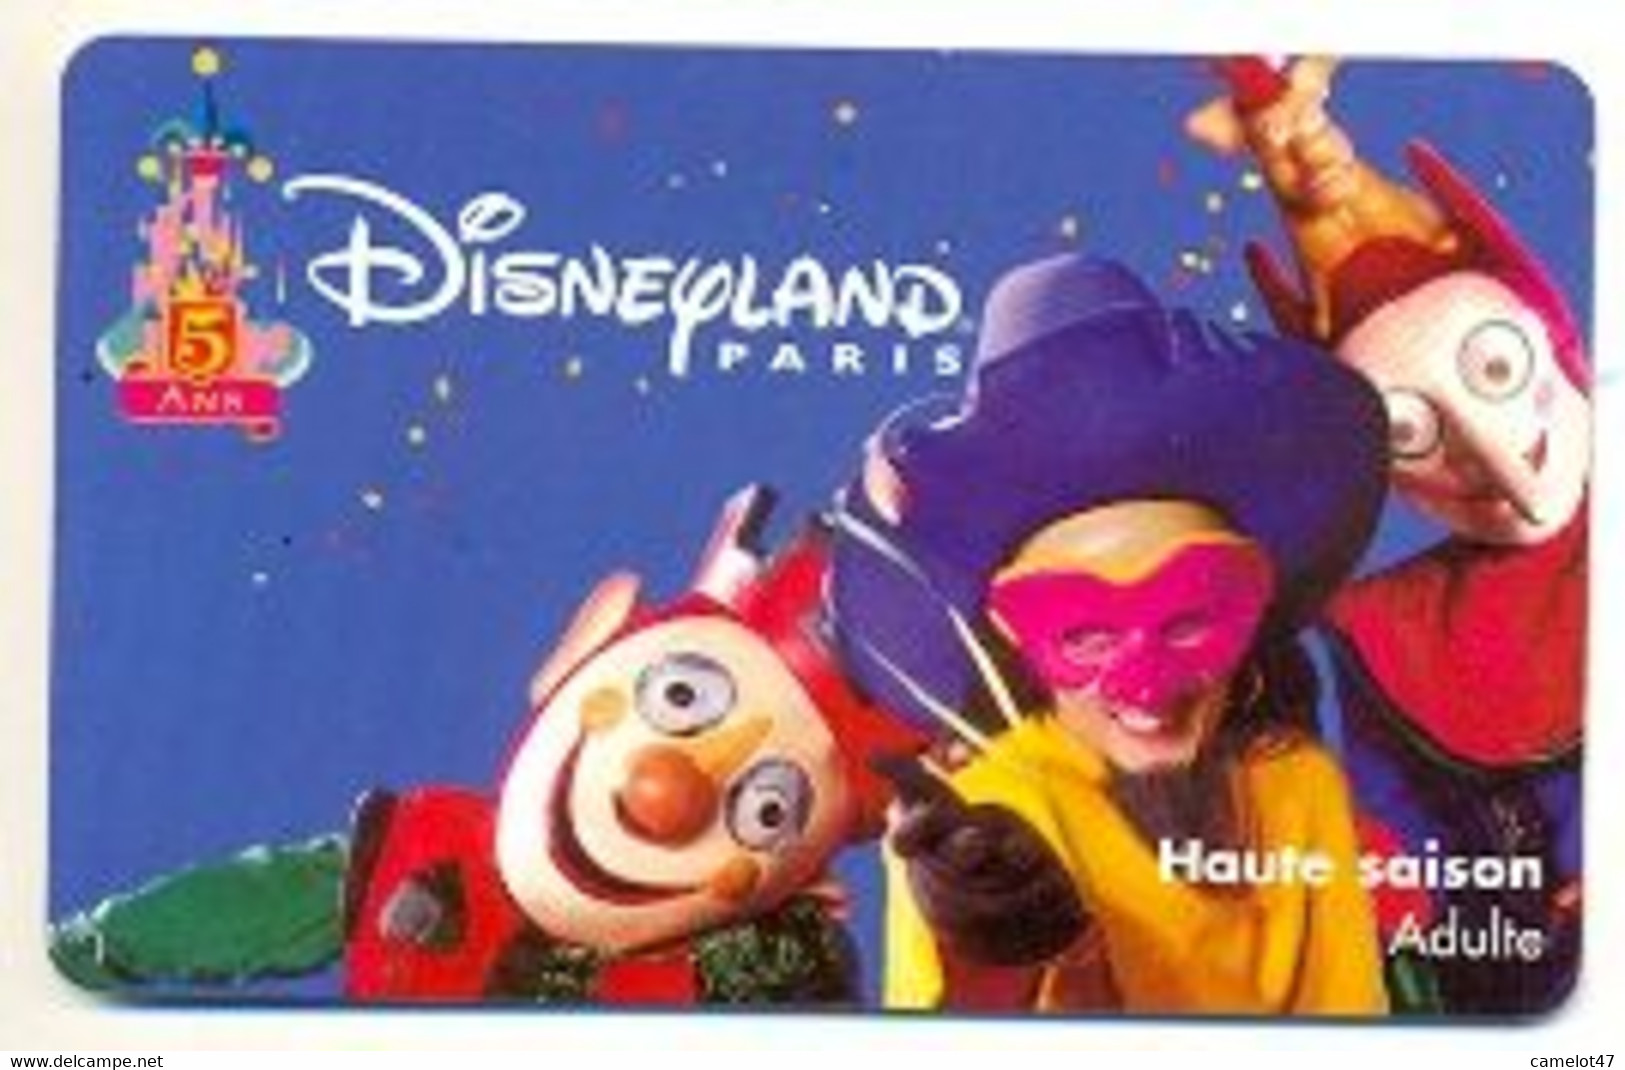 Disneyland Paris Ticket, Usagé, Used Condition. # Dtp-6 - Pasaportes Disney